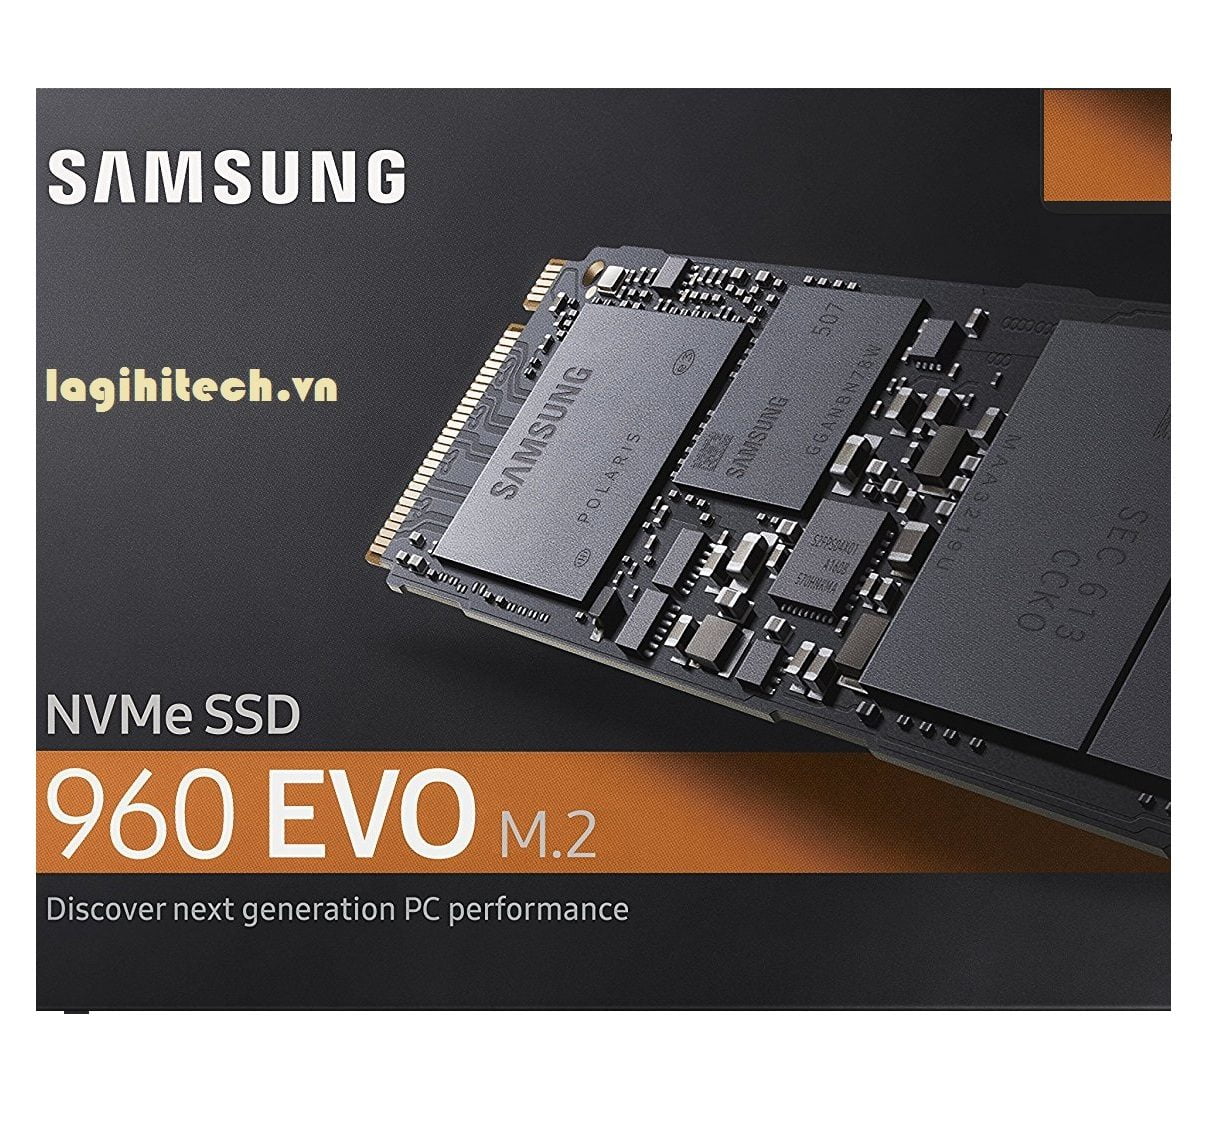 SSD Samsung 960 EVO M2 hinh anh 1